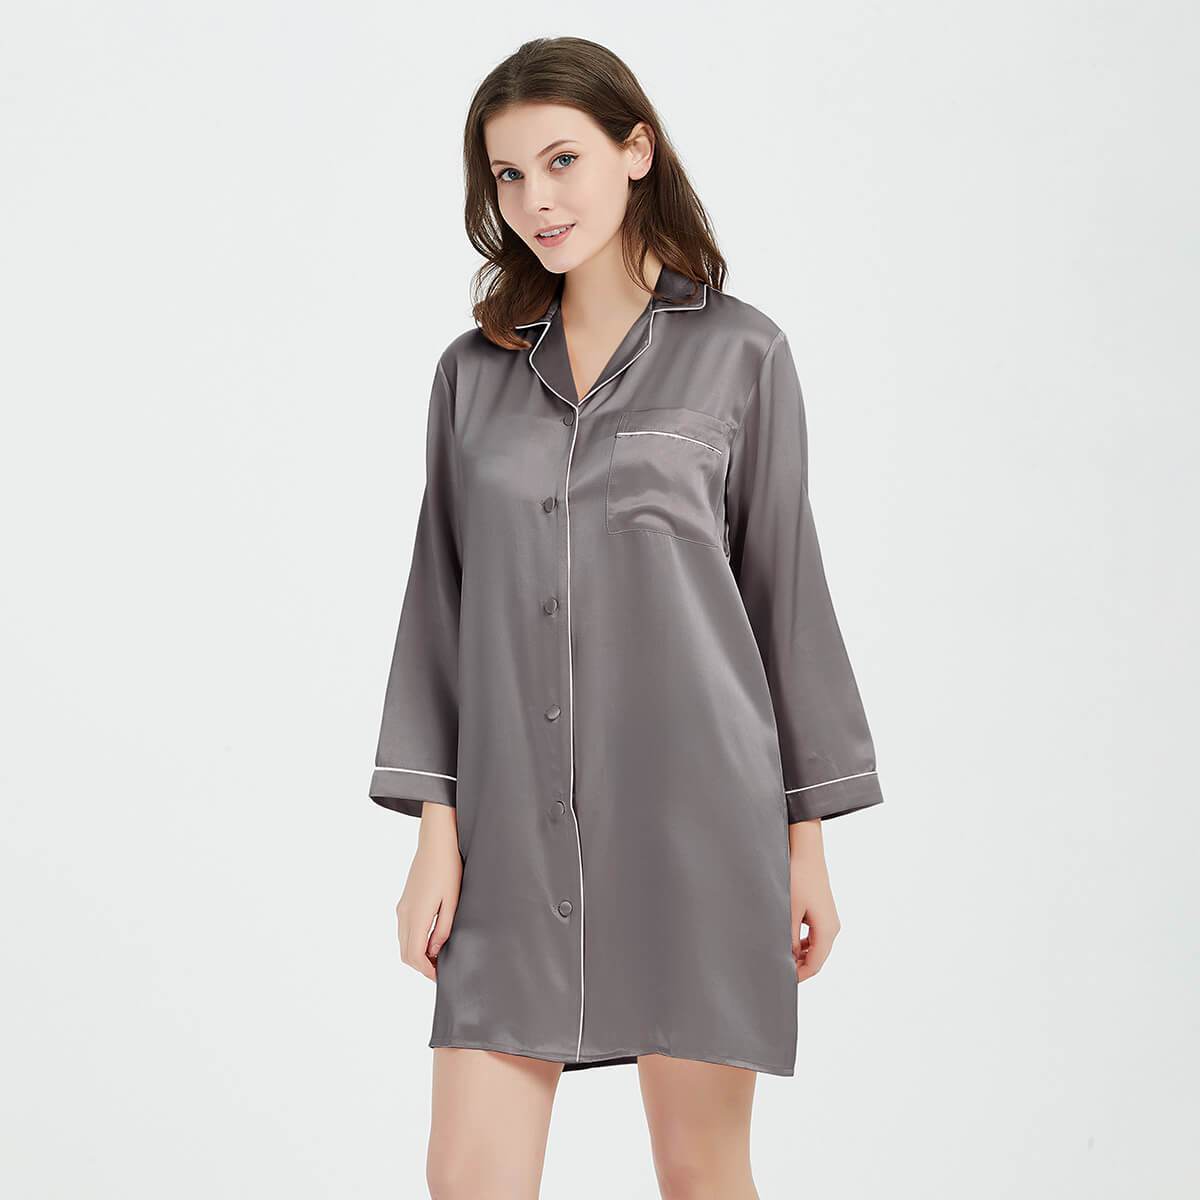  Womens Sleep Shirt Long Sleeve Sleepwear Silk Nightshirt  Button Down Pajama Top Violet S